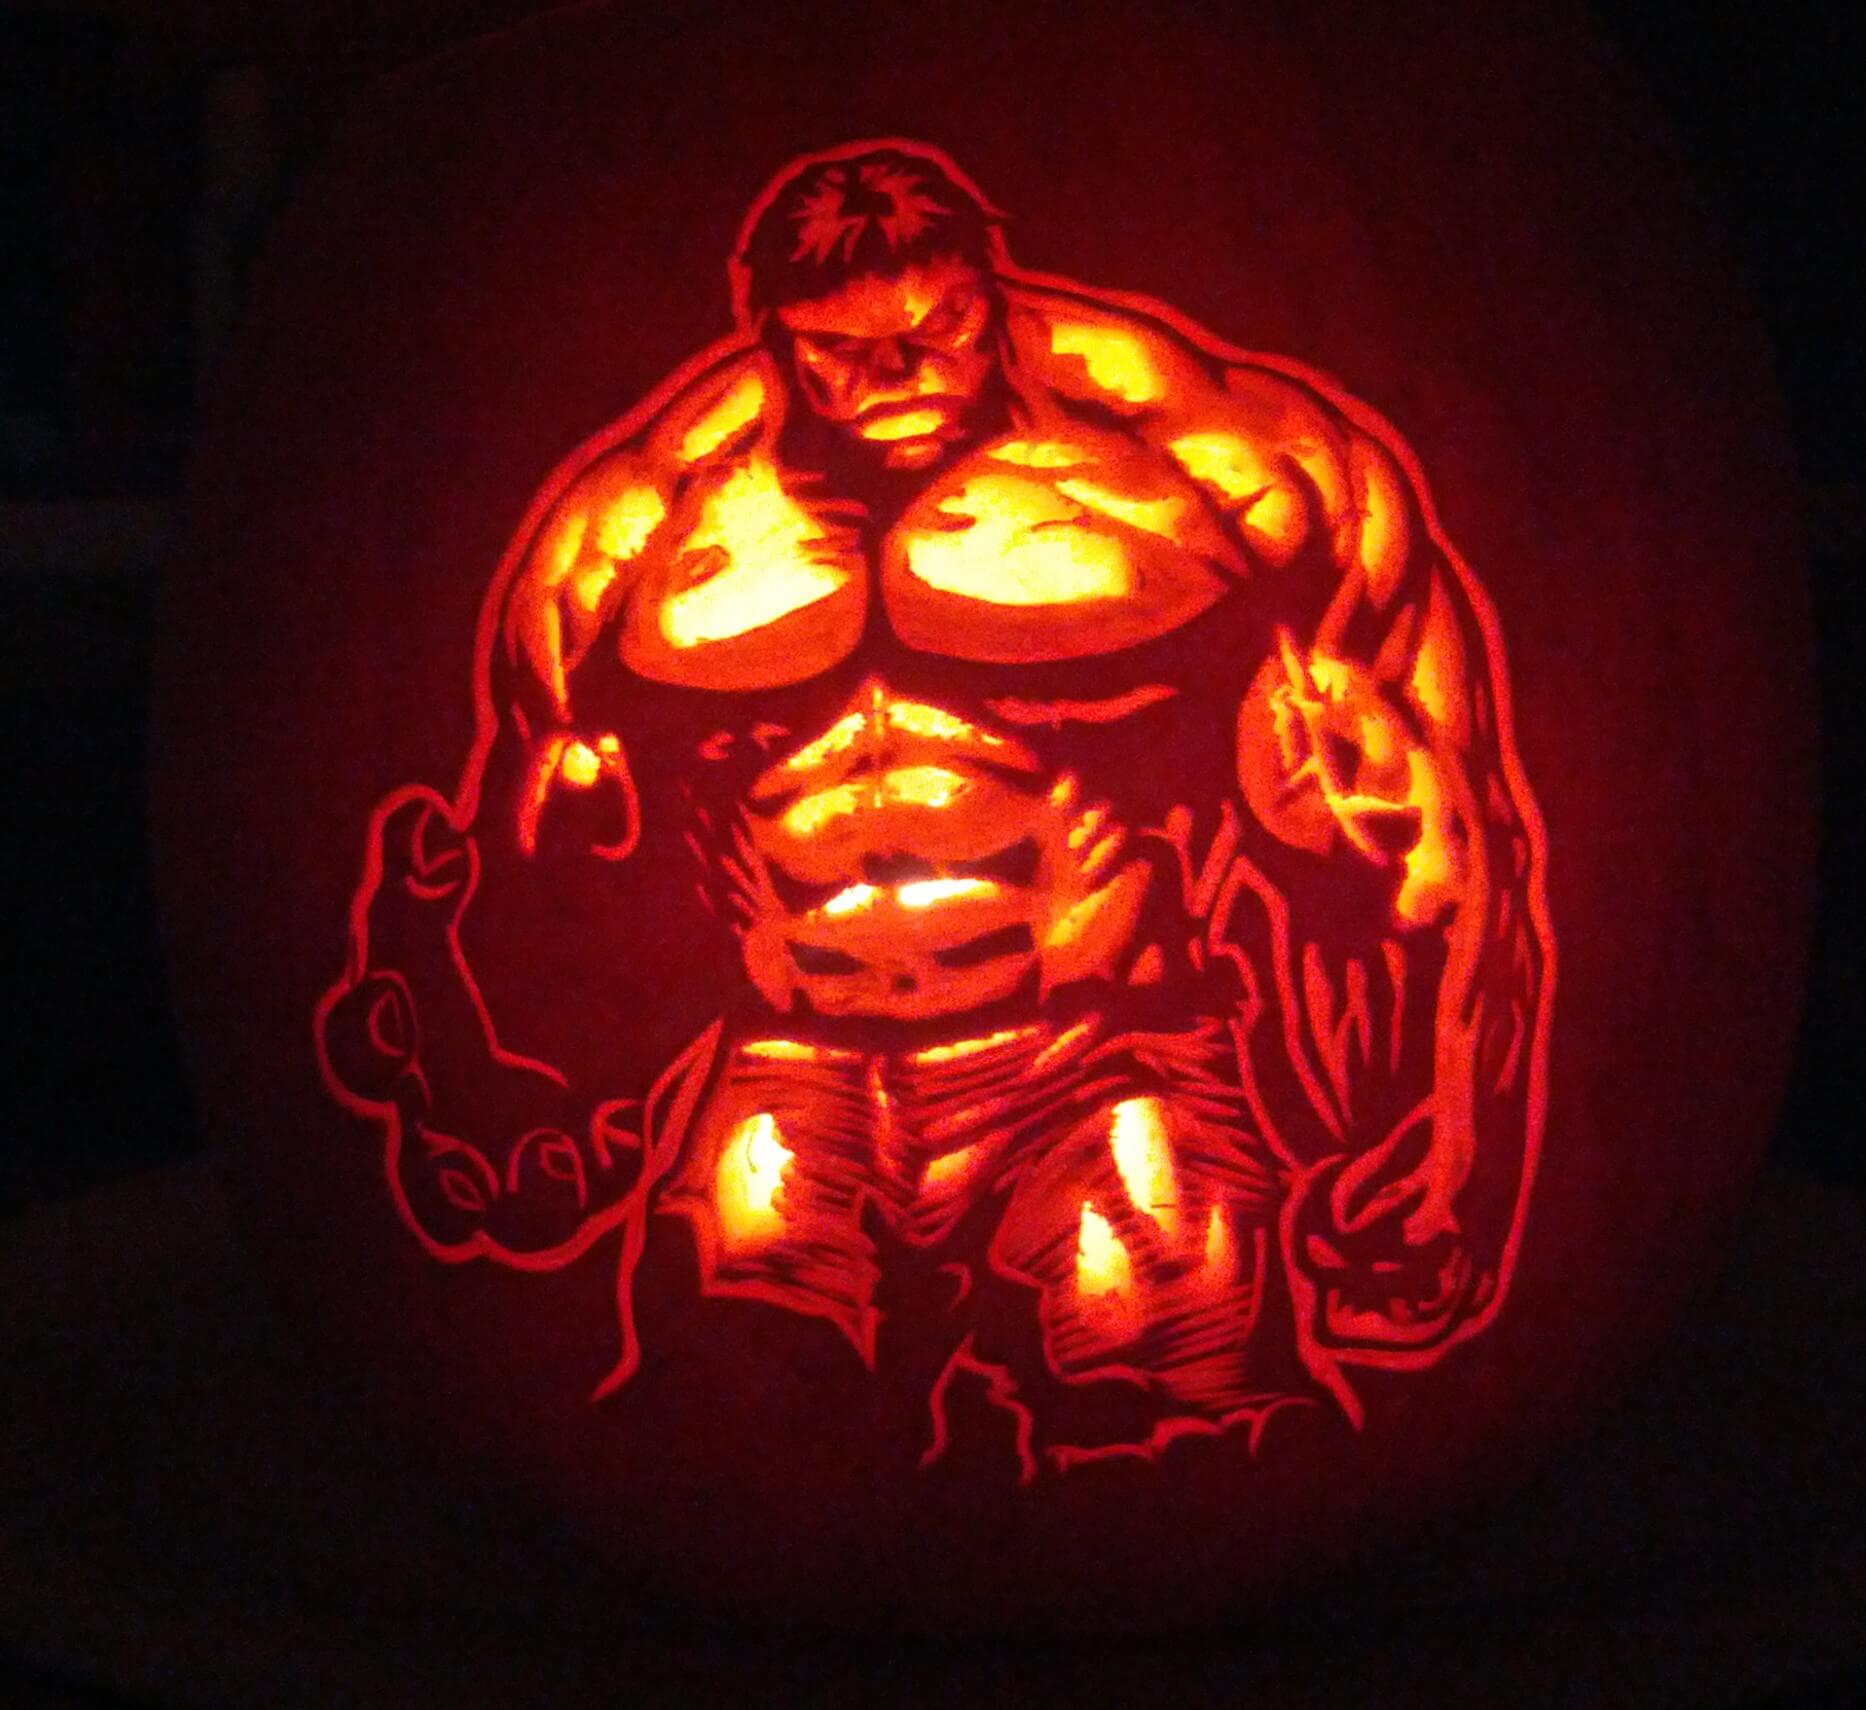 Hulk Pumpkin Carving